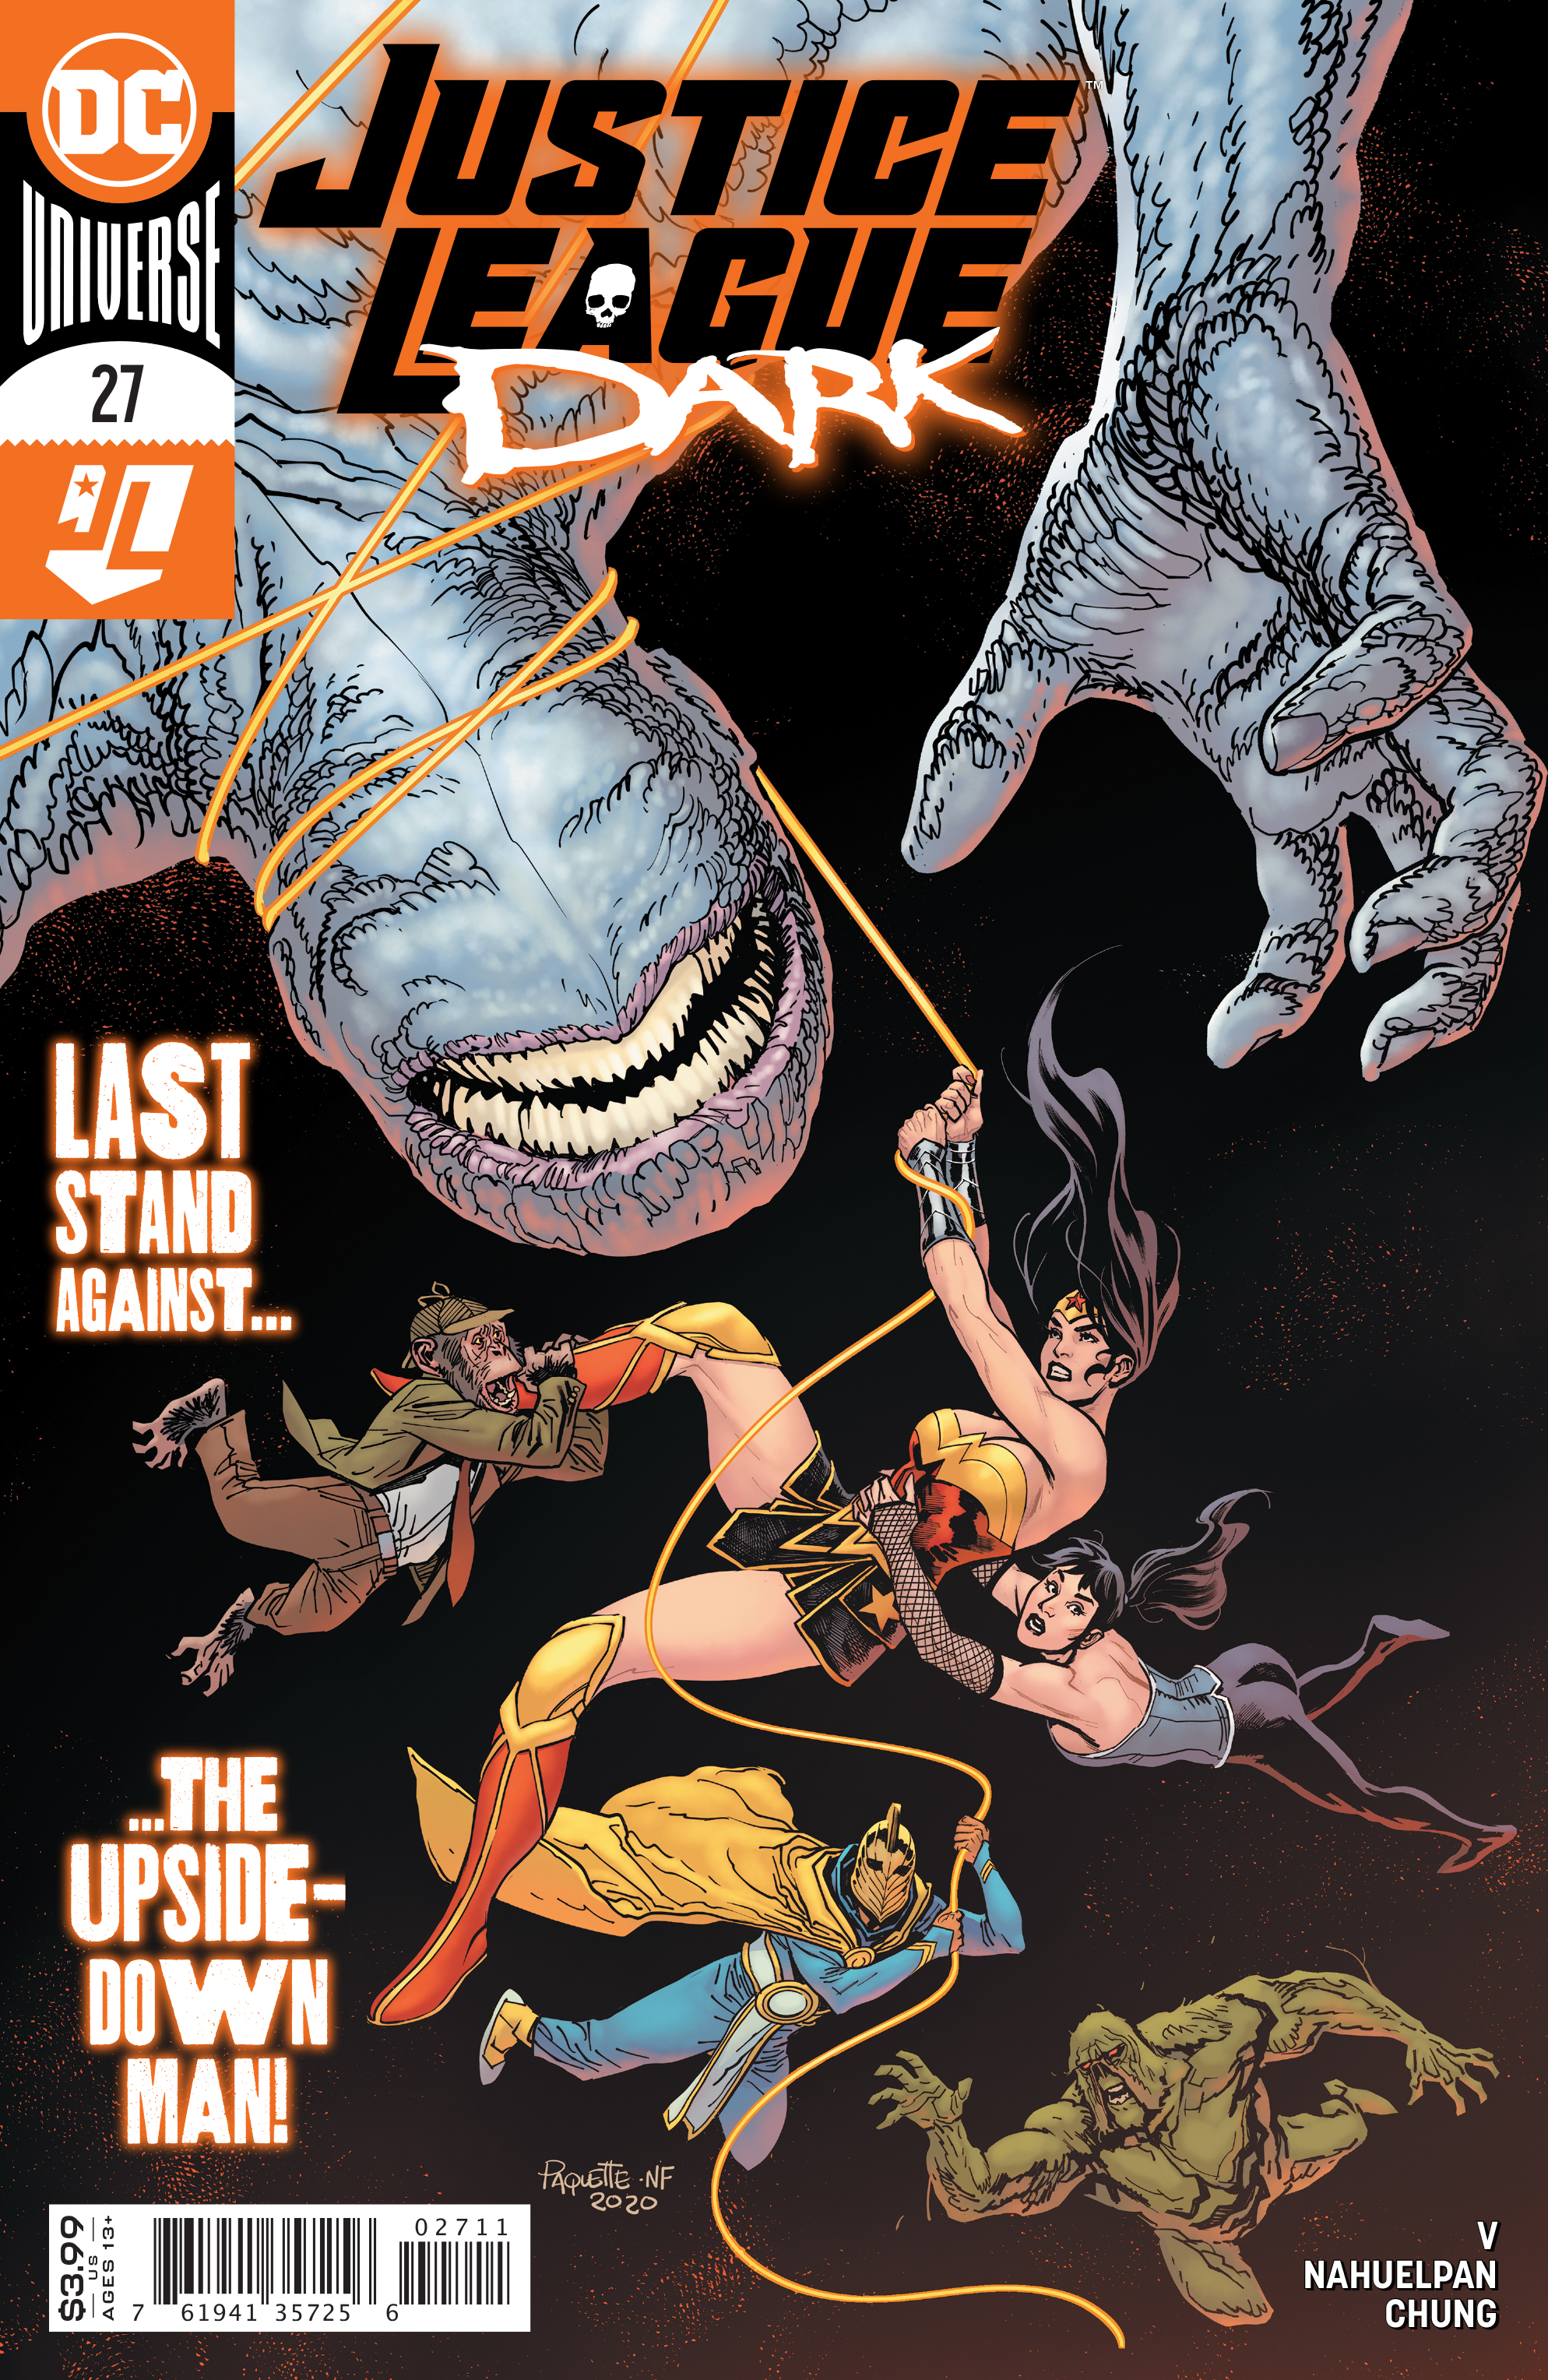 Justice League Dark #27 Cover A Yanick Paquette (2018)